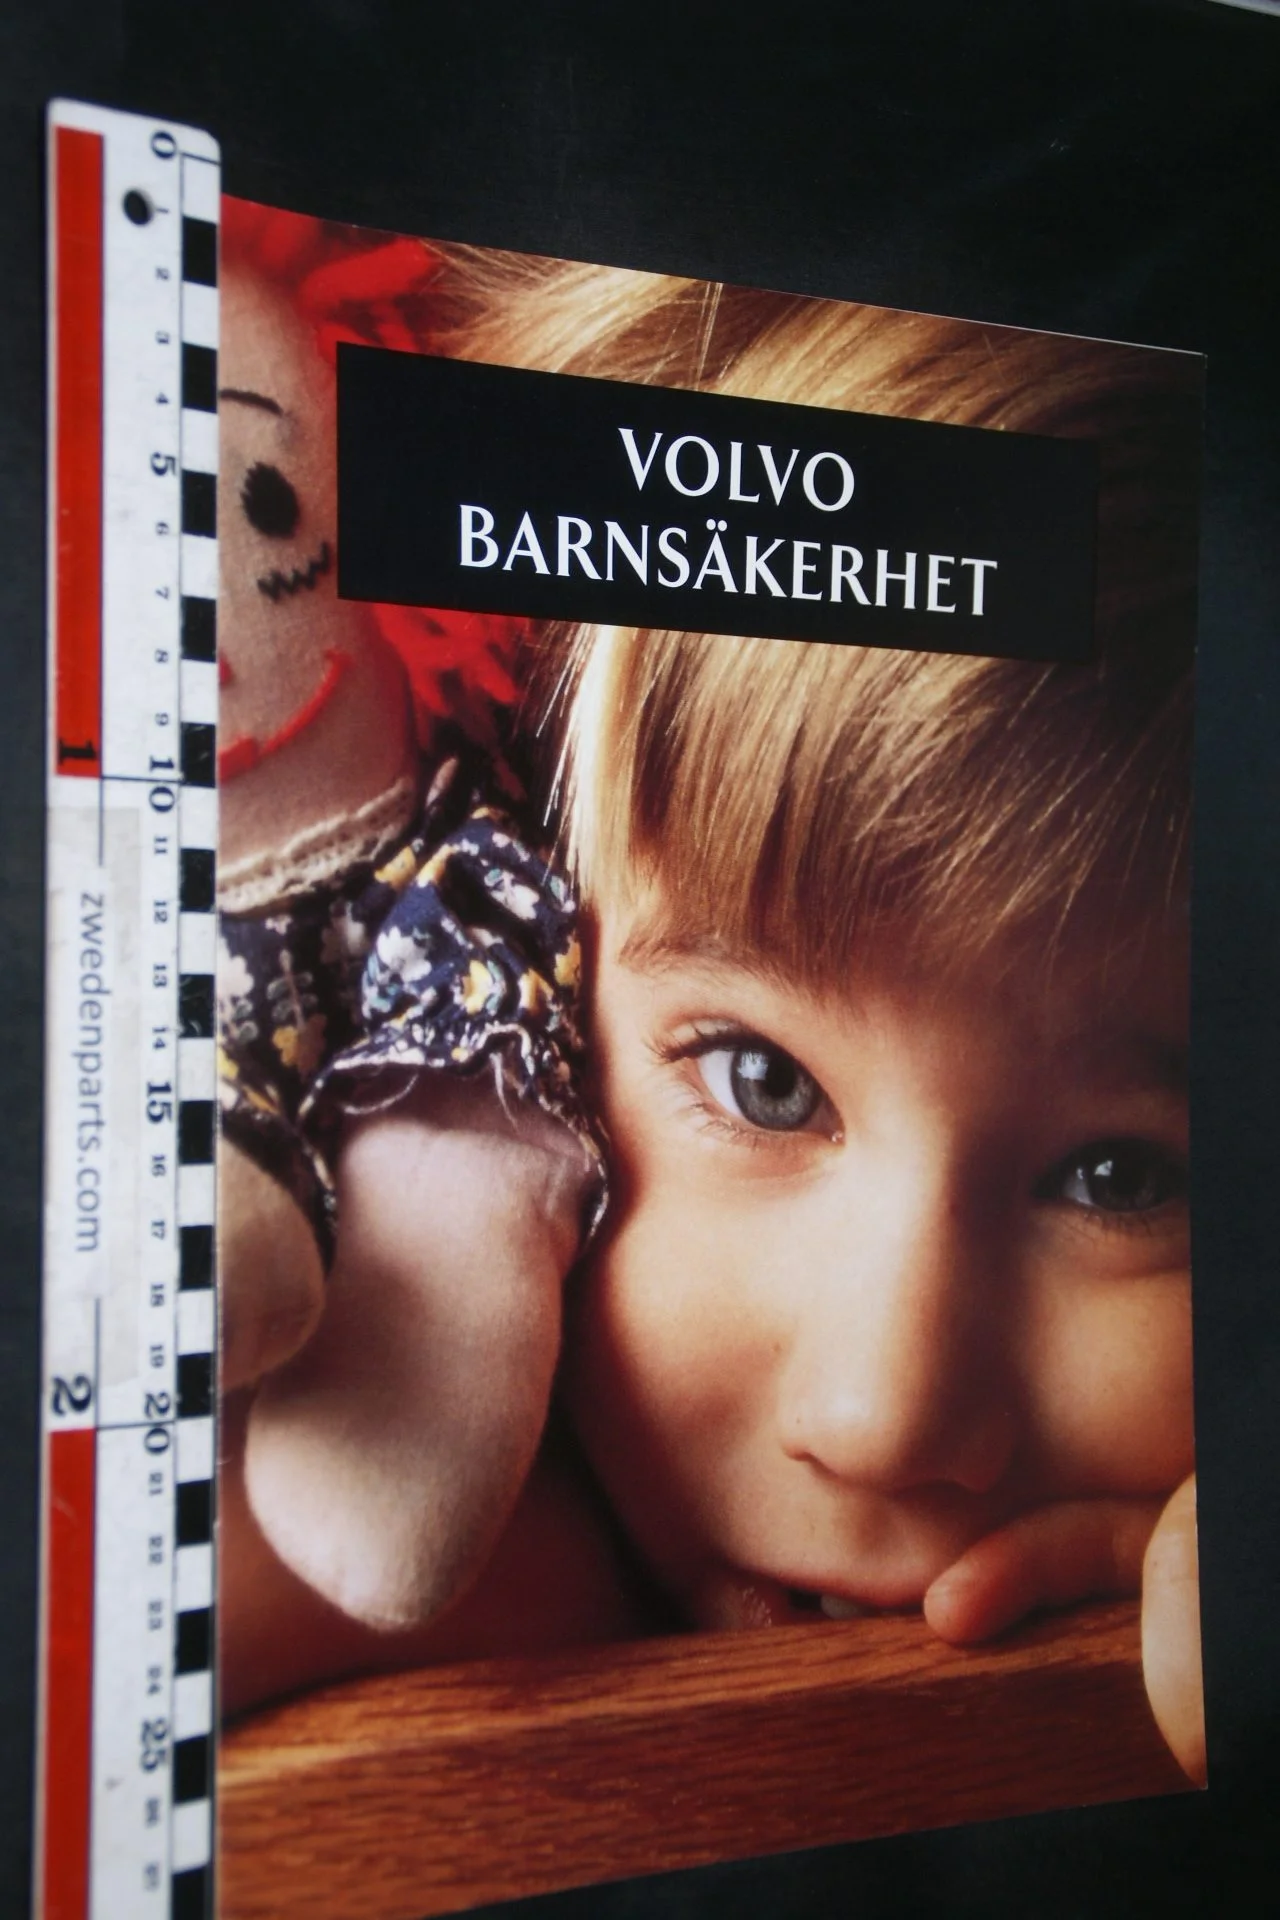 DSC03392 1993 brochure Volvo barnsäkerhrt VBE 4918 Zweeds rotated